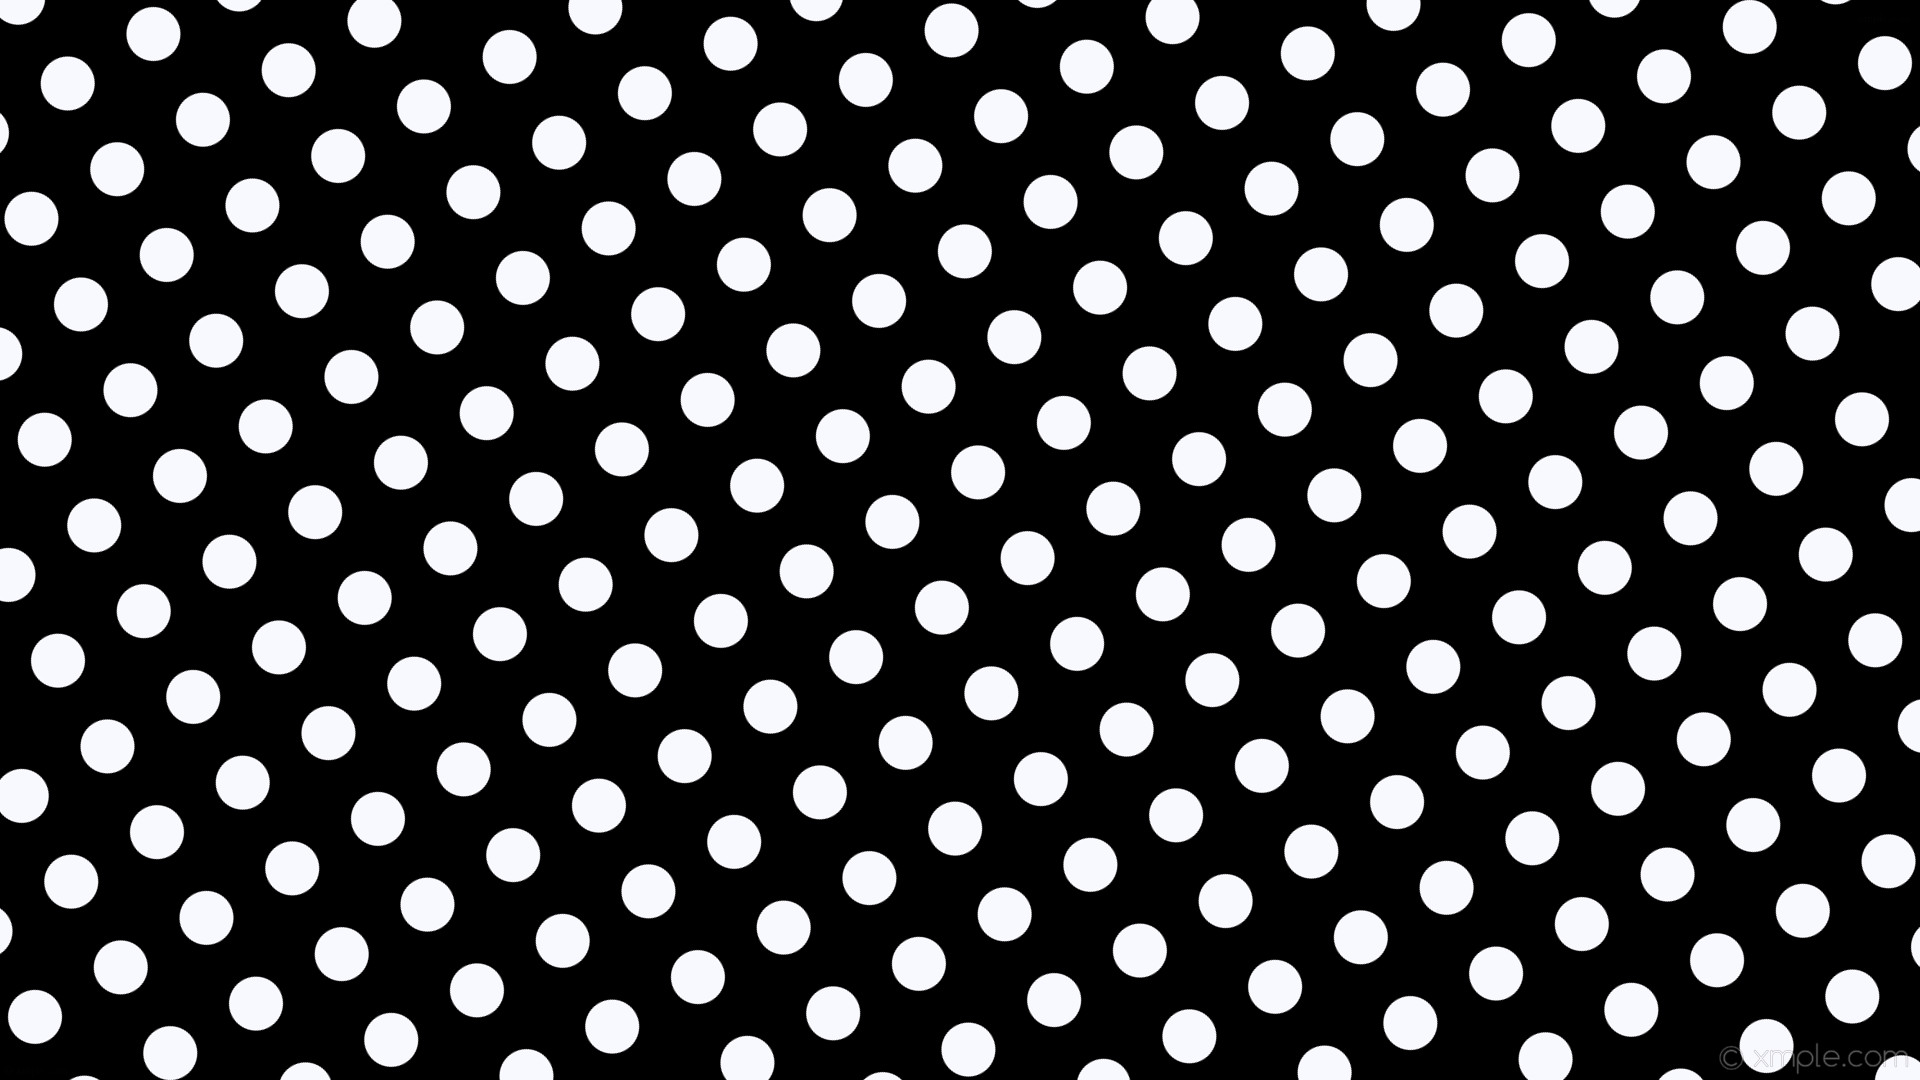 Wallpaper spots black dots white polka ghost white #f8f8ff 210 54px 99px